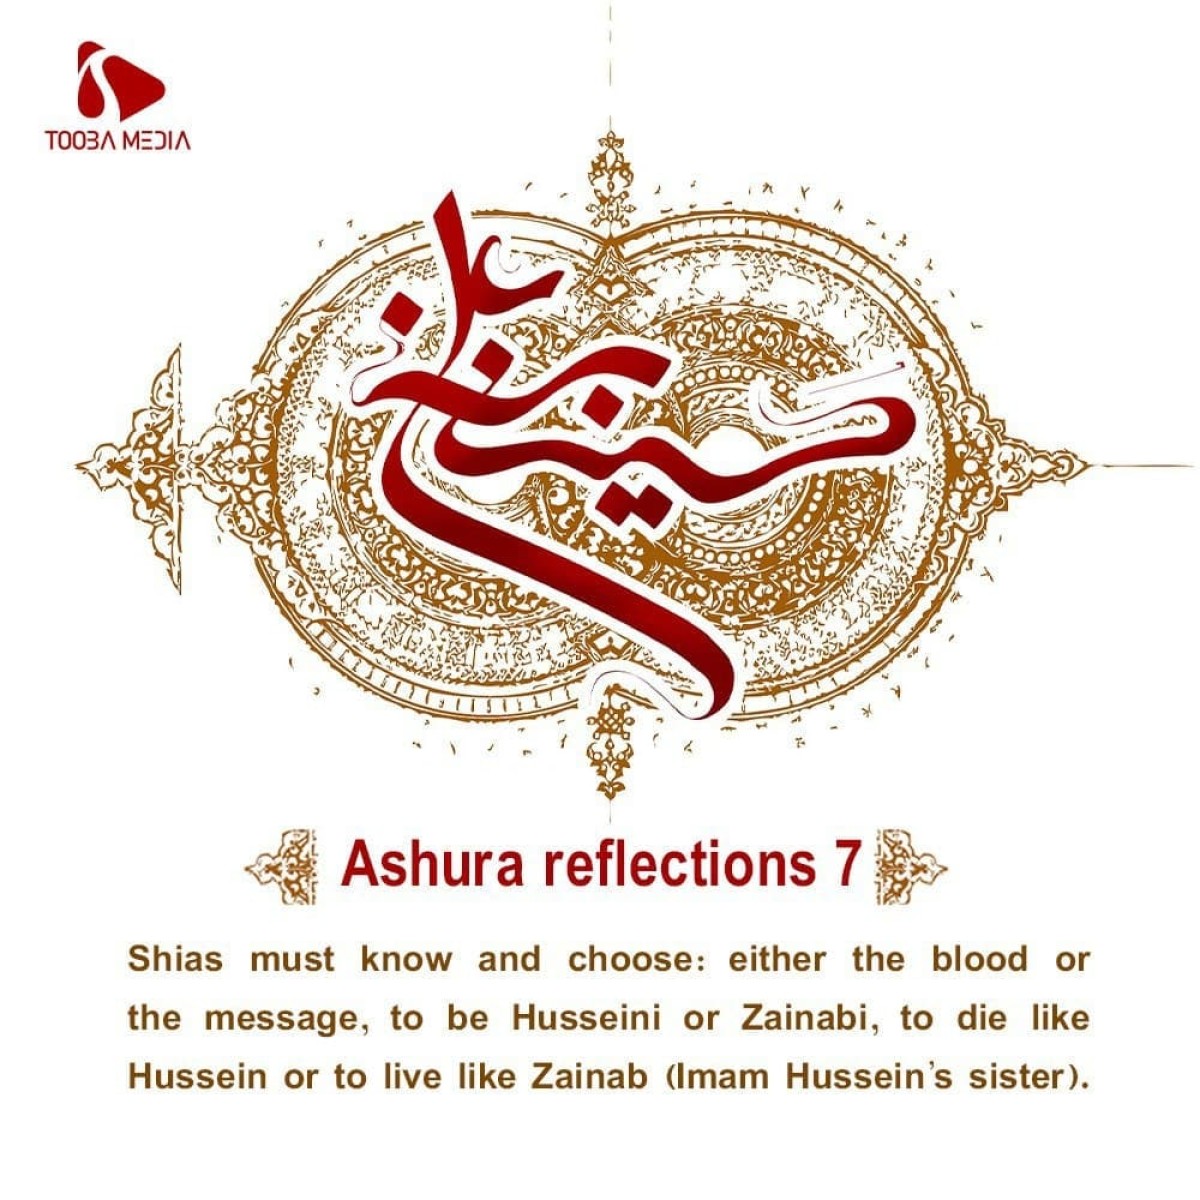 Ashura reflections 7